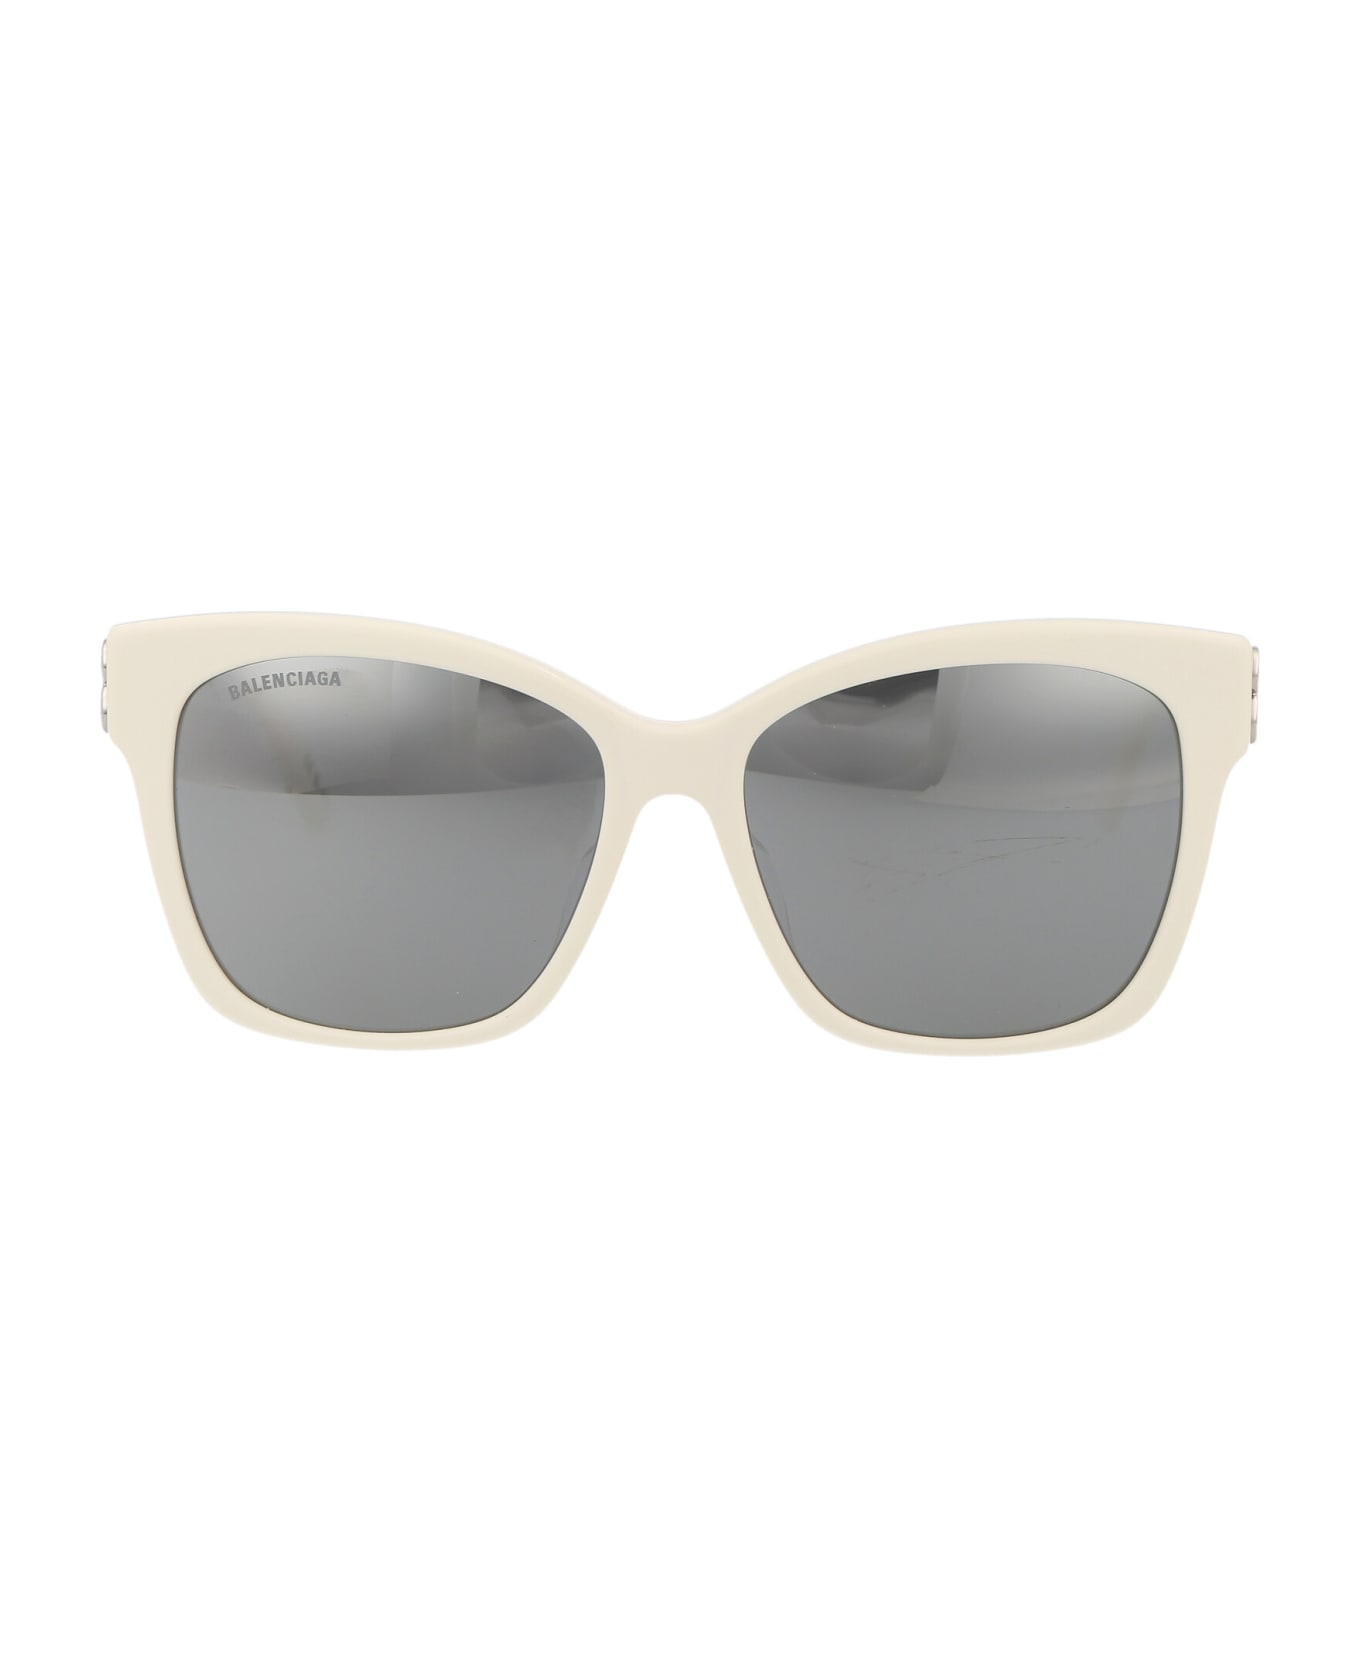 Balenciaga Eyewear Bb0102sa Sunglasses - 016 WHITE SILVER SILVER